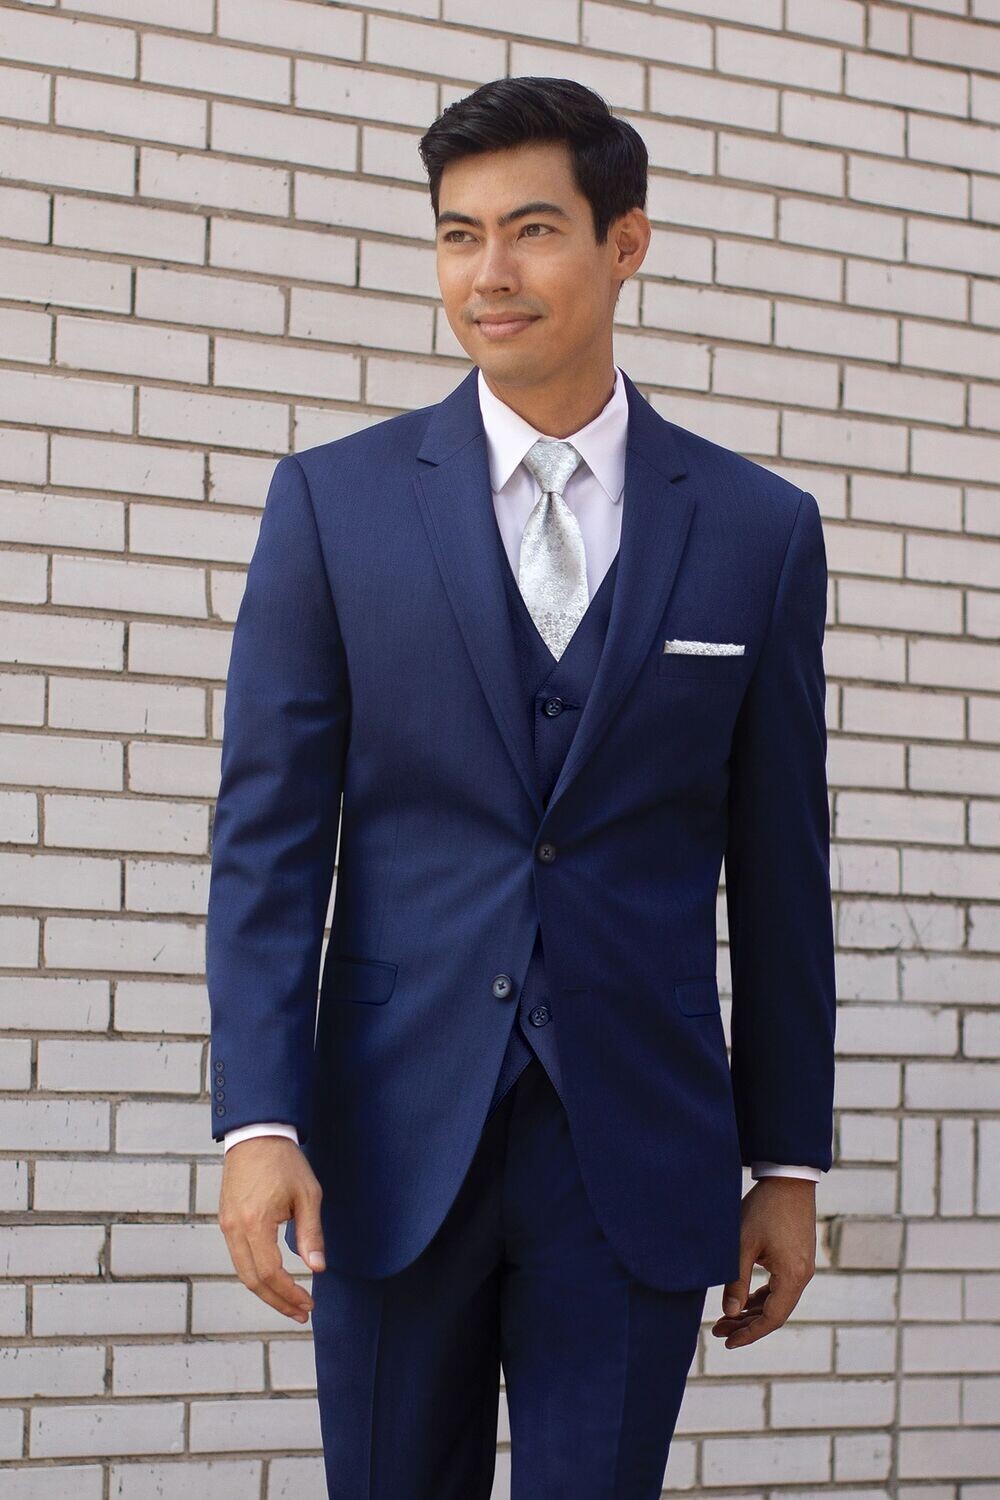 Michael Kors Performance Stretch Suit - Tan, Blue and Medium Grey